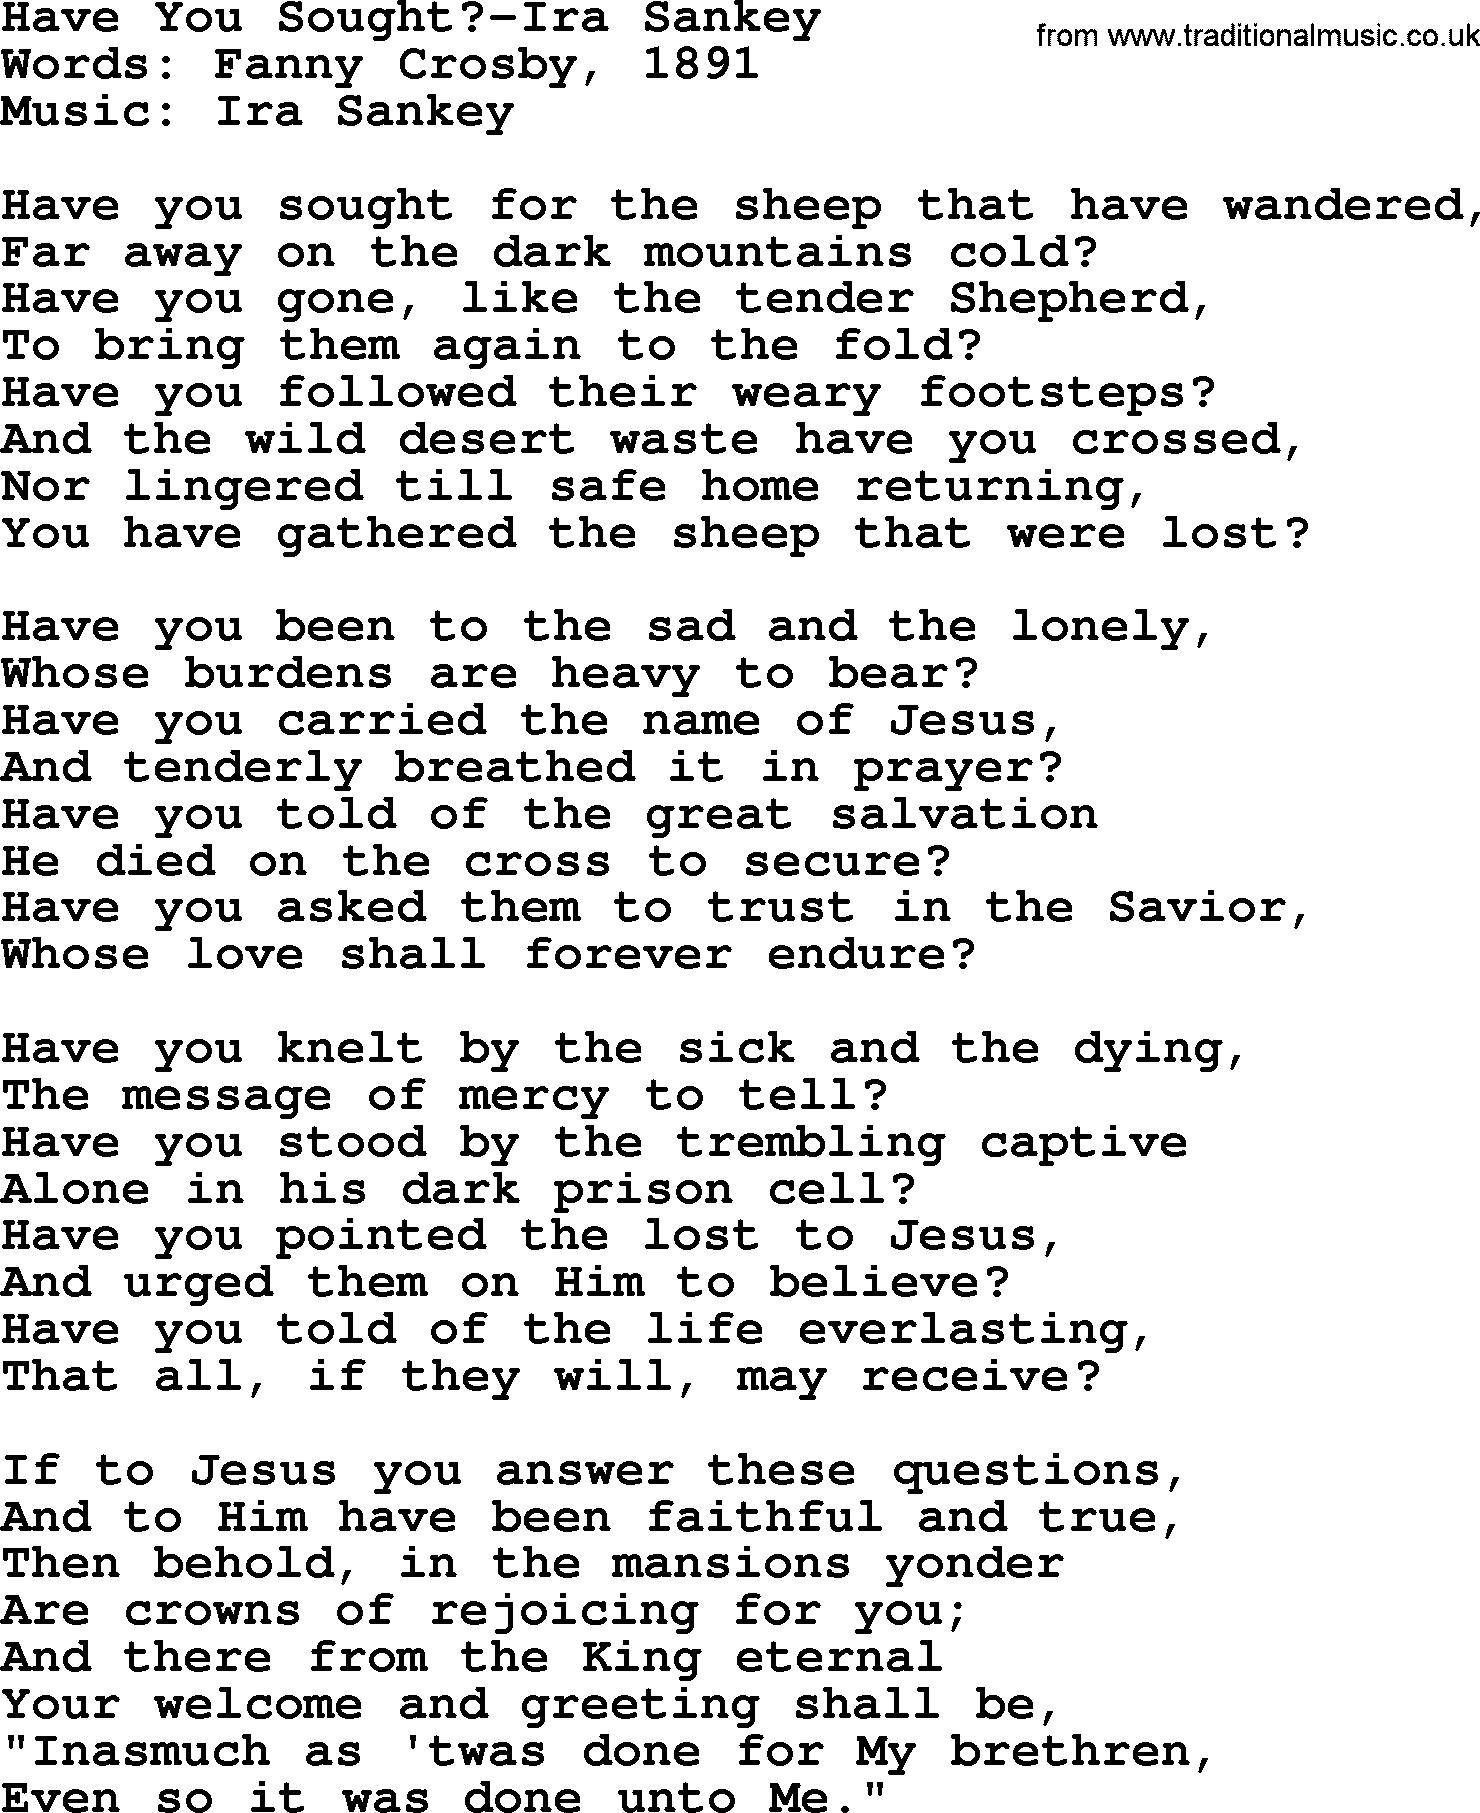 Ira Sankey hymn: Have You Sought-Ira Sankey, lyrics